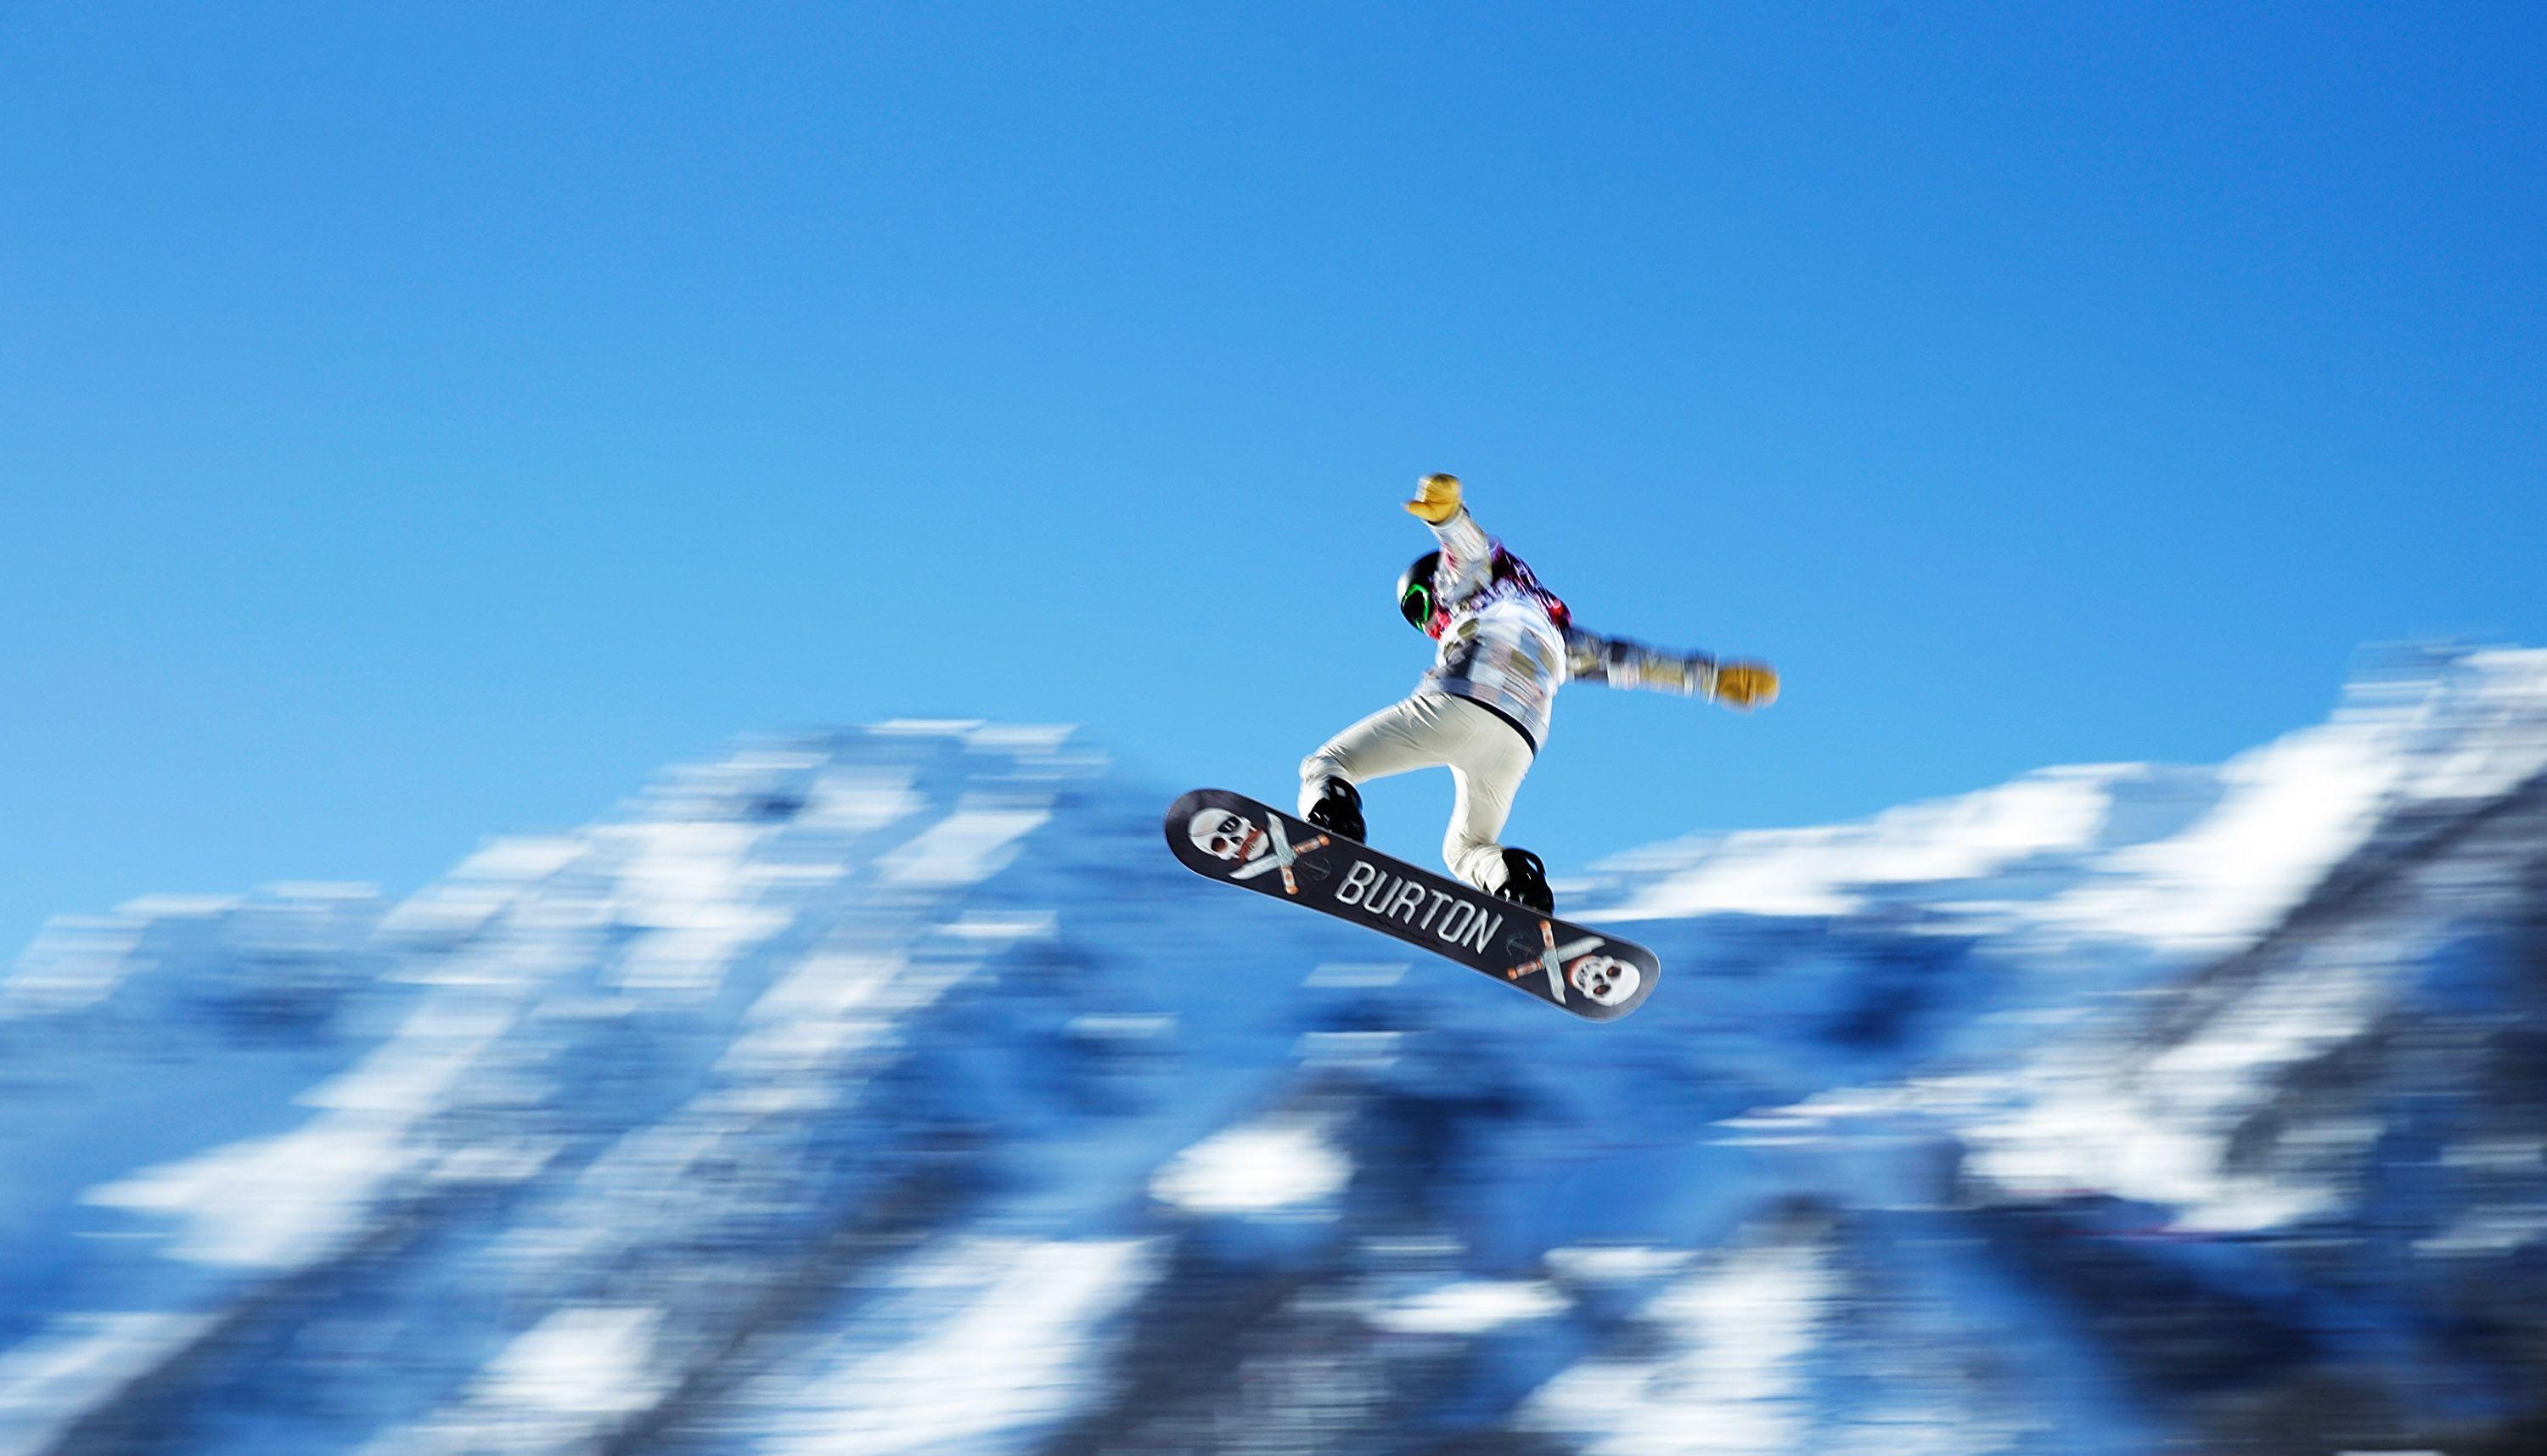 Shaun White 2014 Snowboard Wallpaper Wide or HD. Male Celebrities